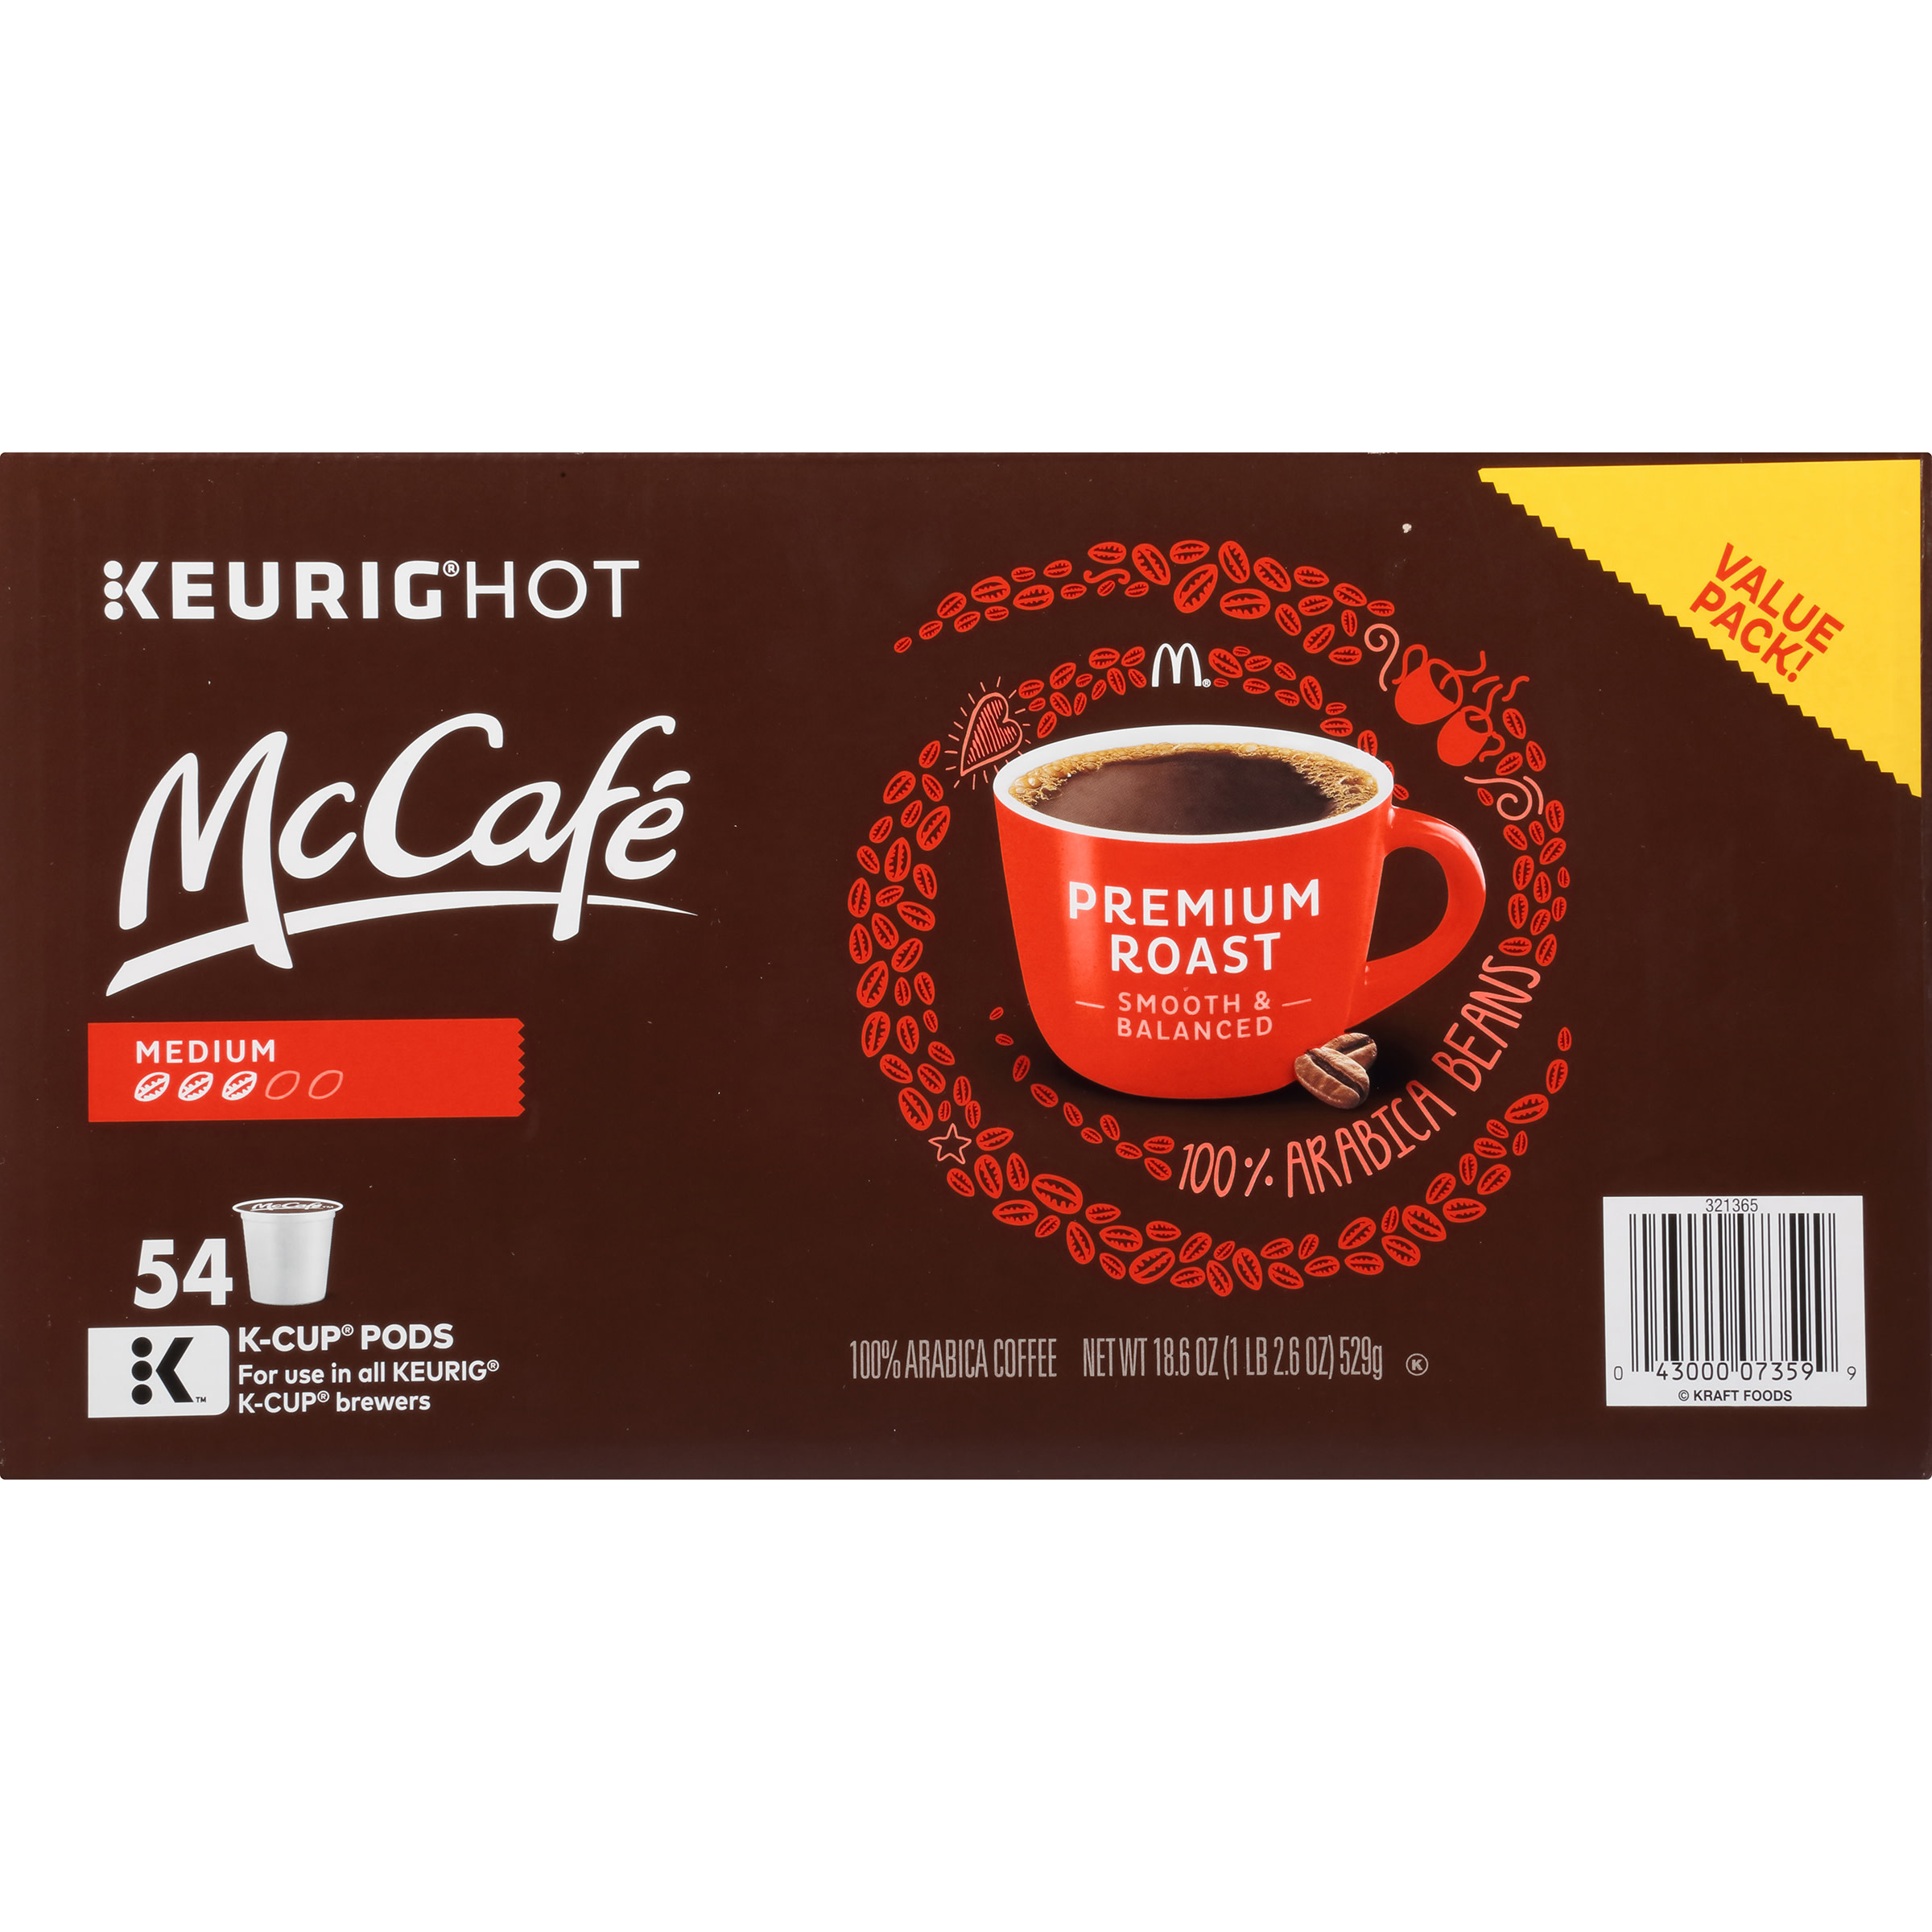 McCafe Premium Roast Medium Coffee K-Cup Pods, 54 ct - 18.6 oz Box - image 2 of 7